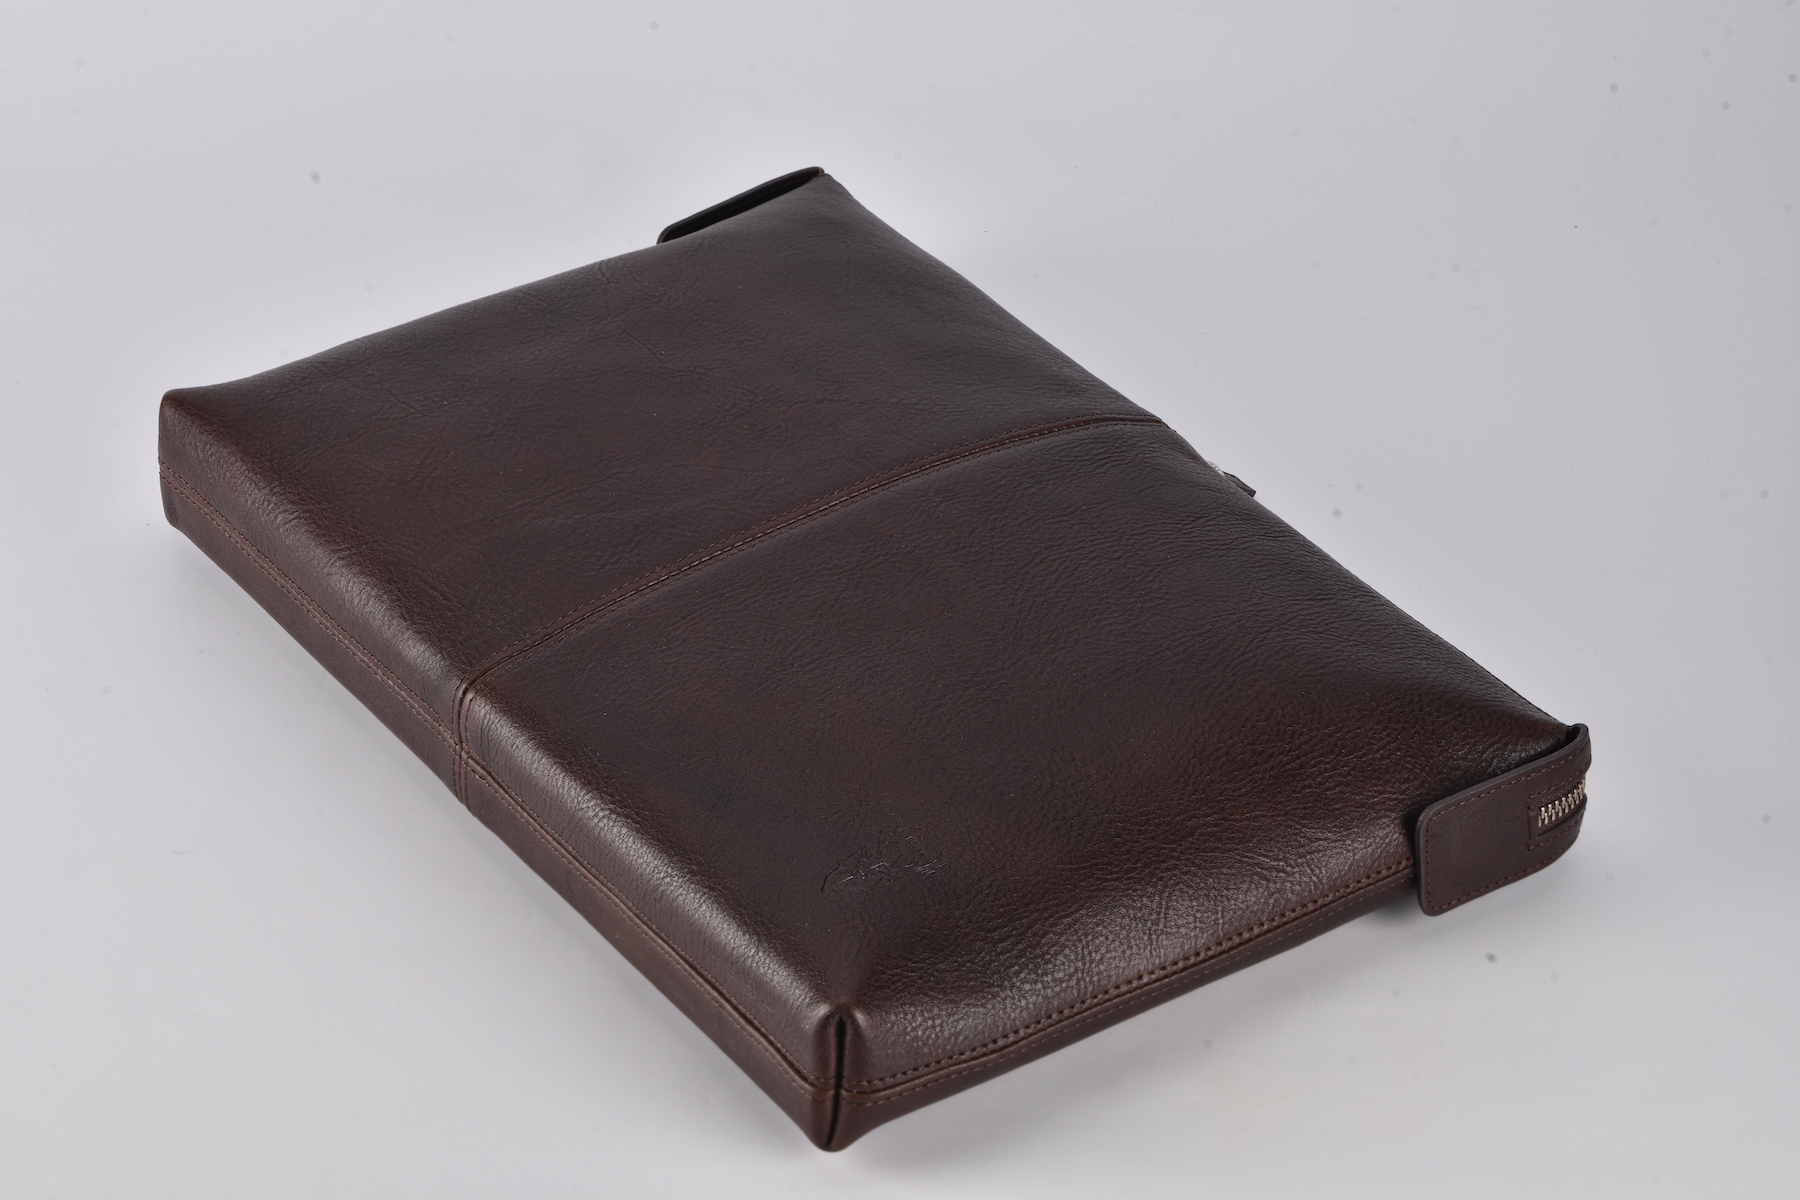 Berlin Macbook Case - Chocolate Brown